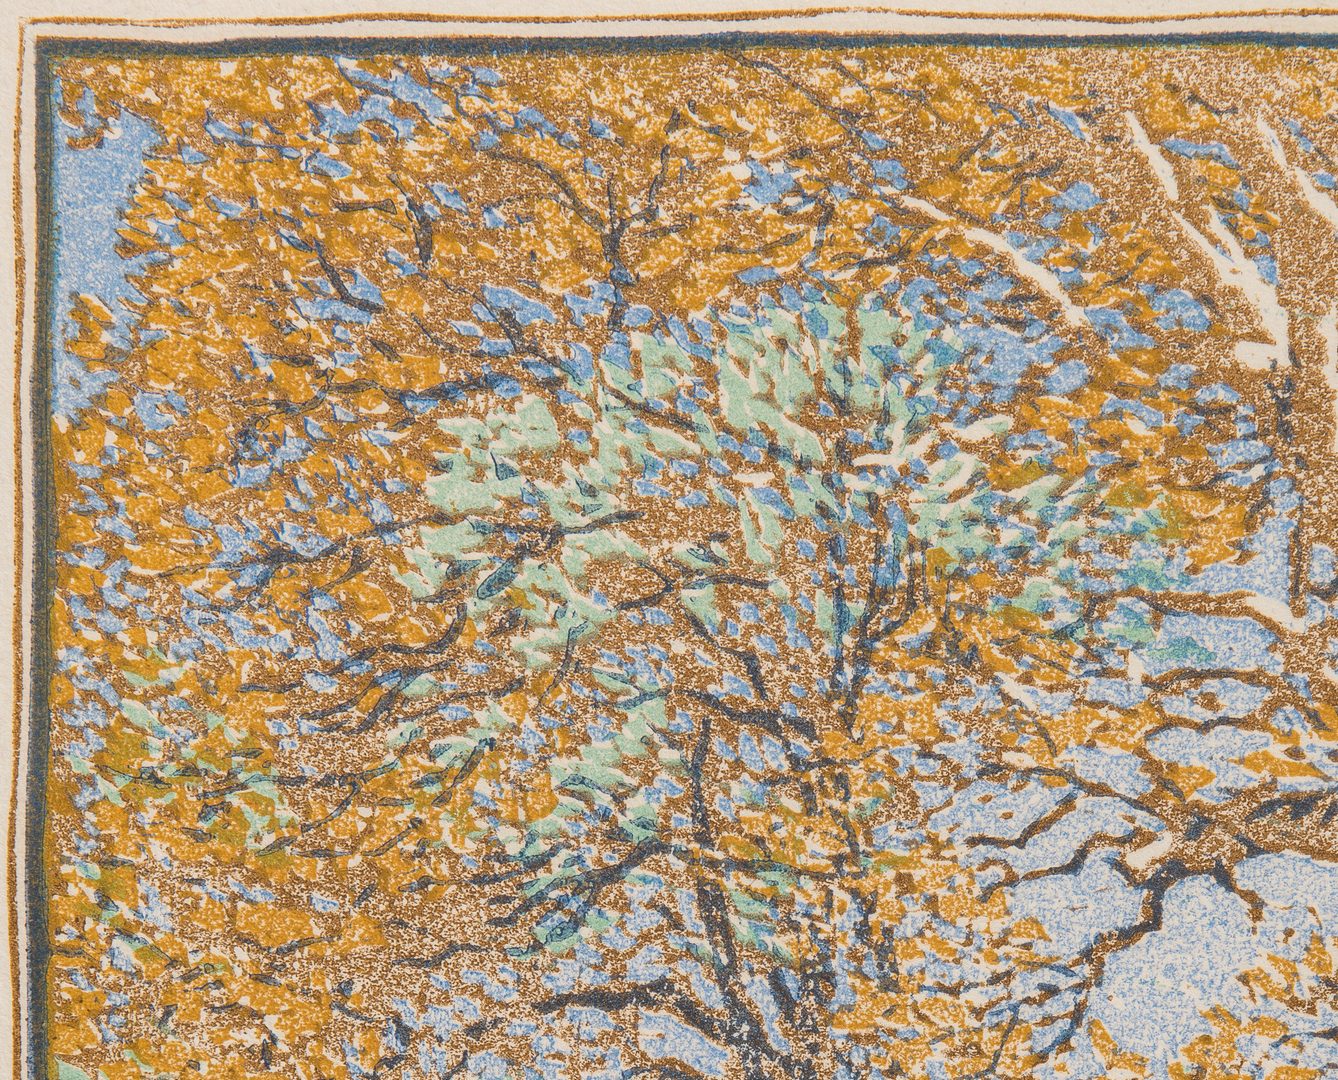 Lot 614: Gustave Baumann Color Woodcut, Salt Creek